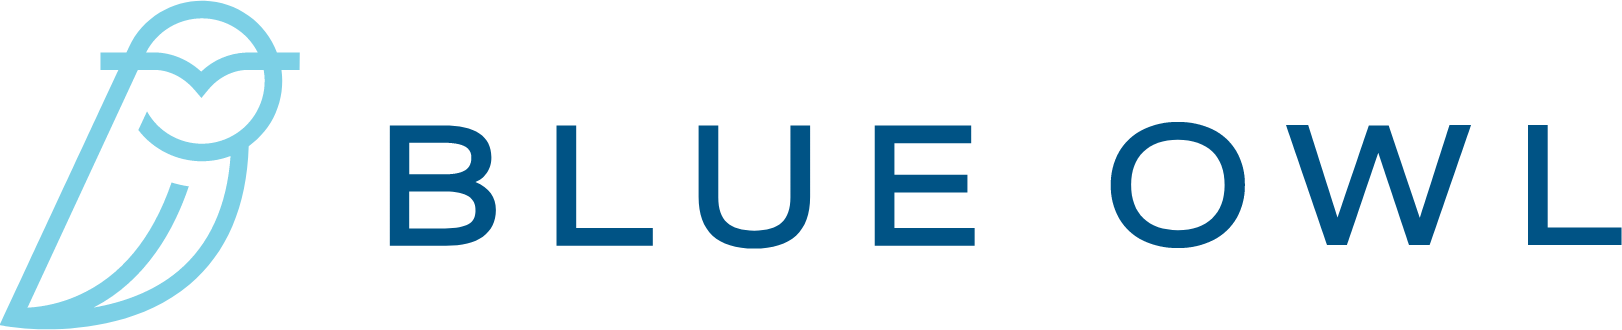 Blue Owl Capital logo large (transparent PNG)